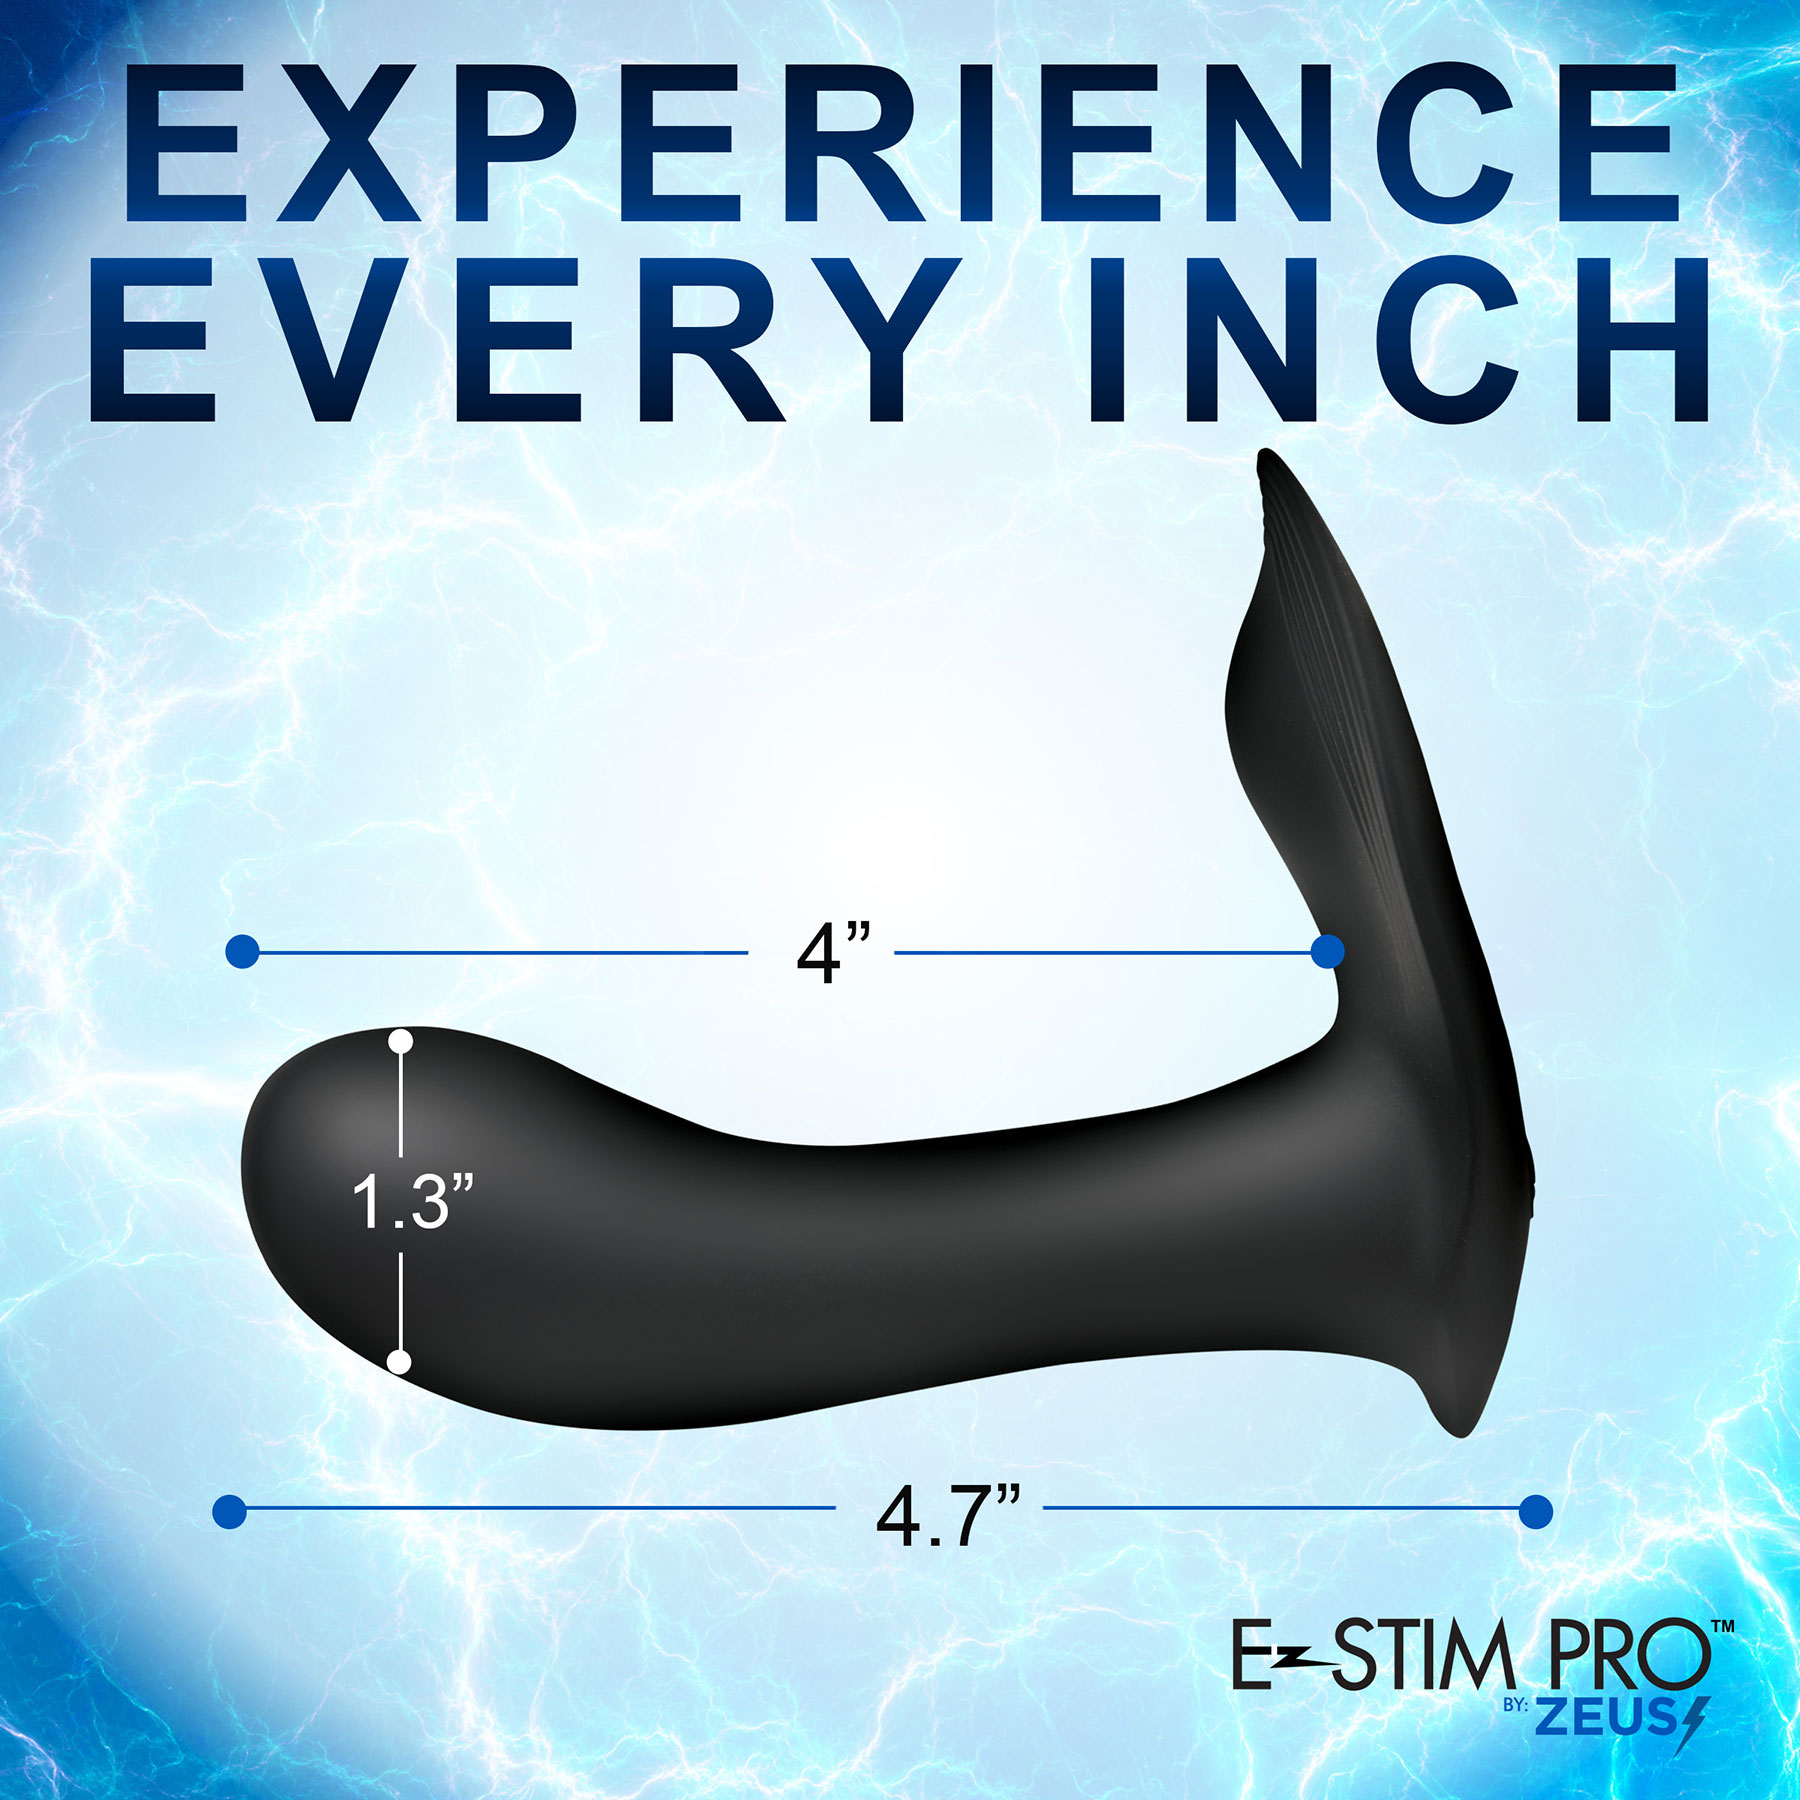 Zeus E-Stim Pro Panty Vibe Rechargeable Silicone G-Spot Vibrator - Measurements